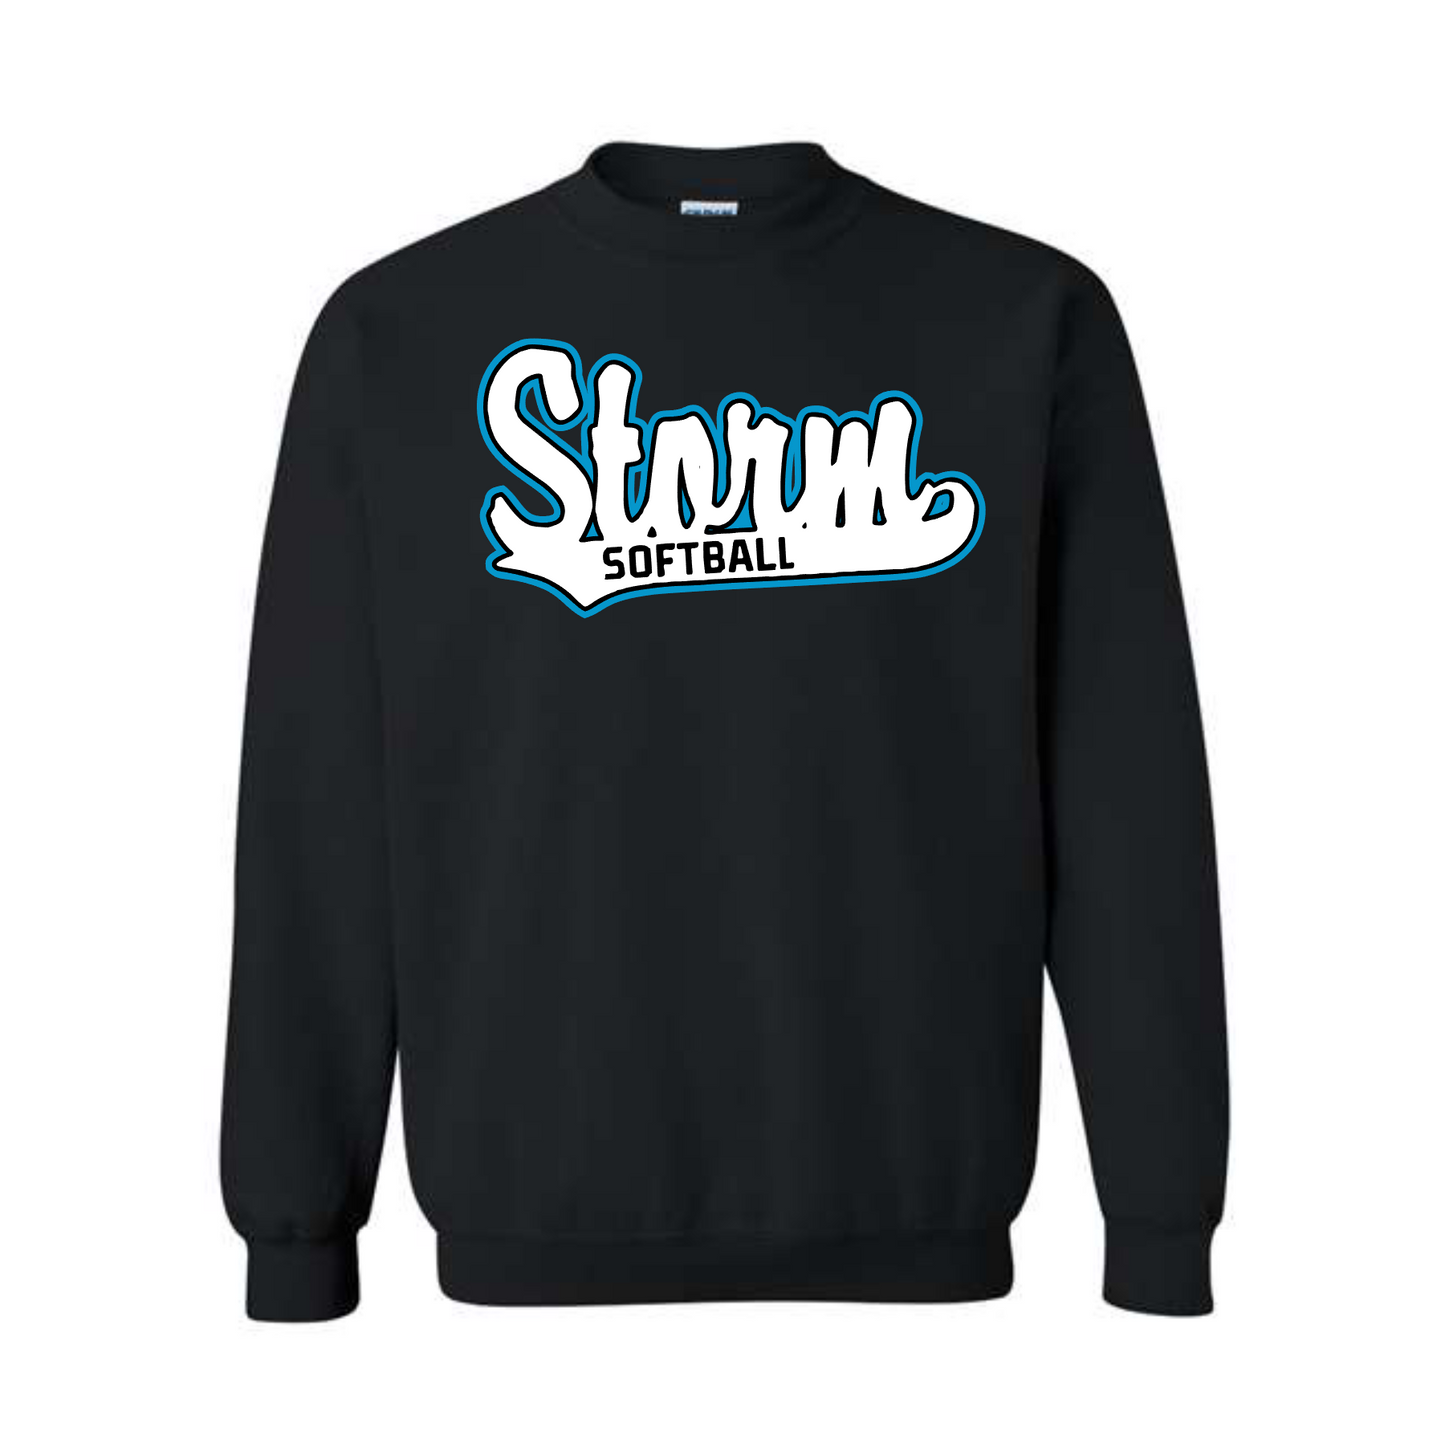 Storm Softball Sweatshirt, Black Storm Sweatshirt, Storm Softball Top